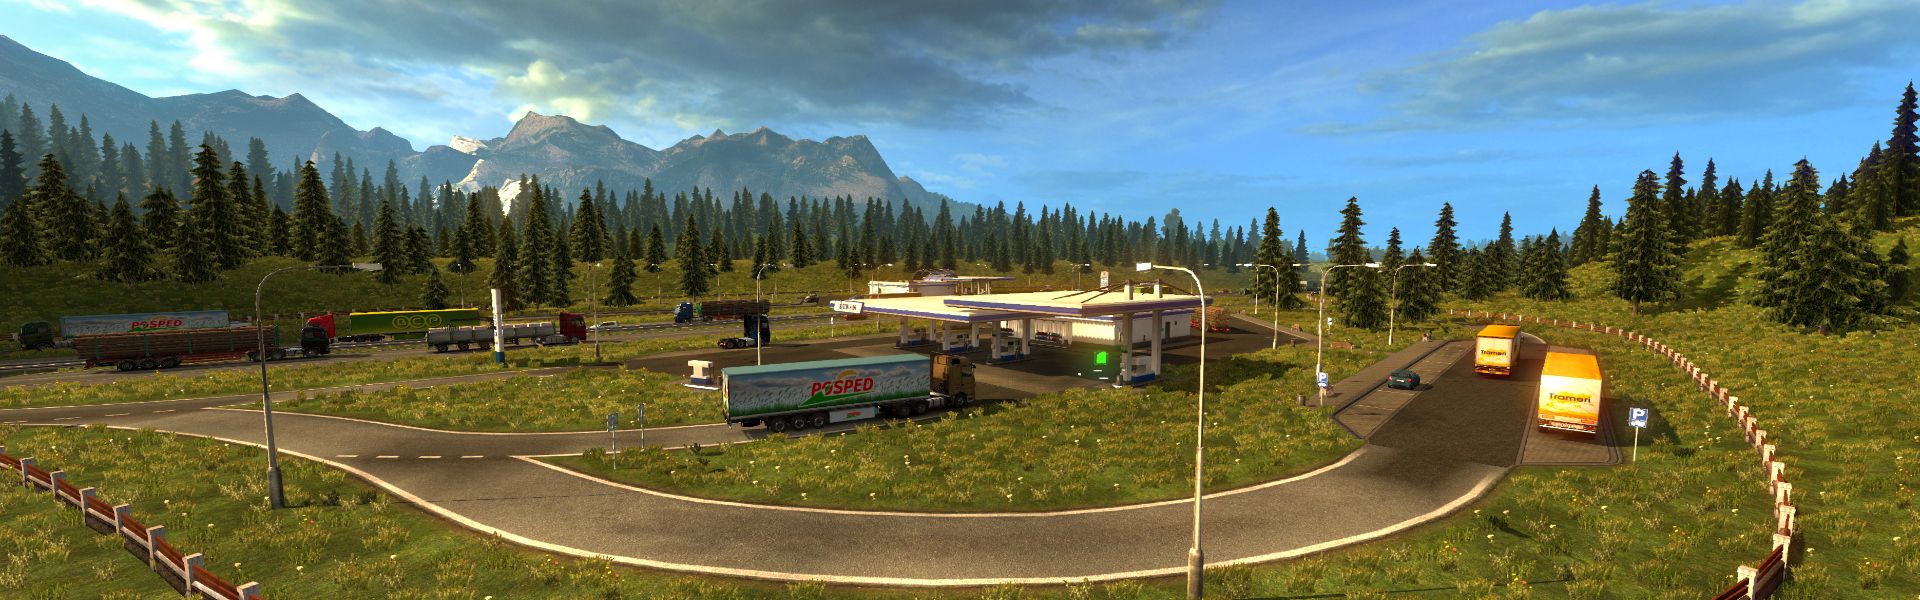 Euro Truck Simulator 2 Complete Edition Steam Key